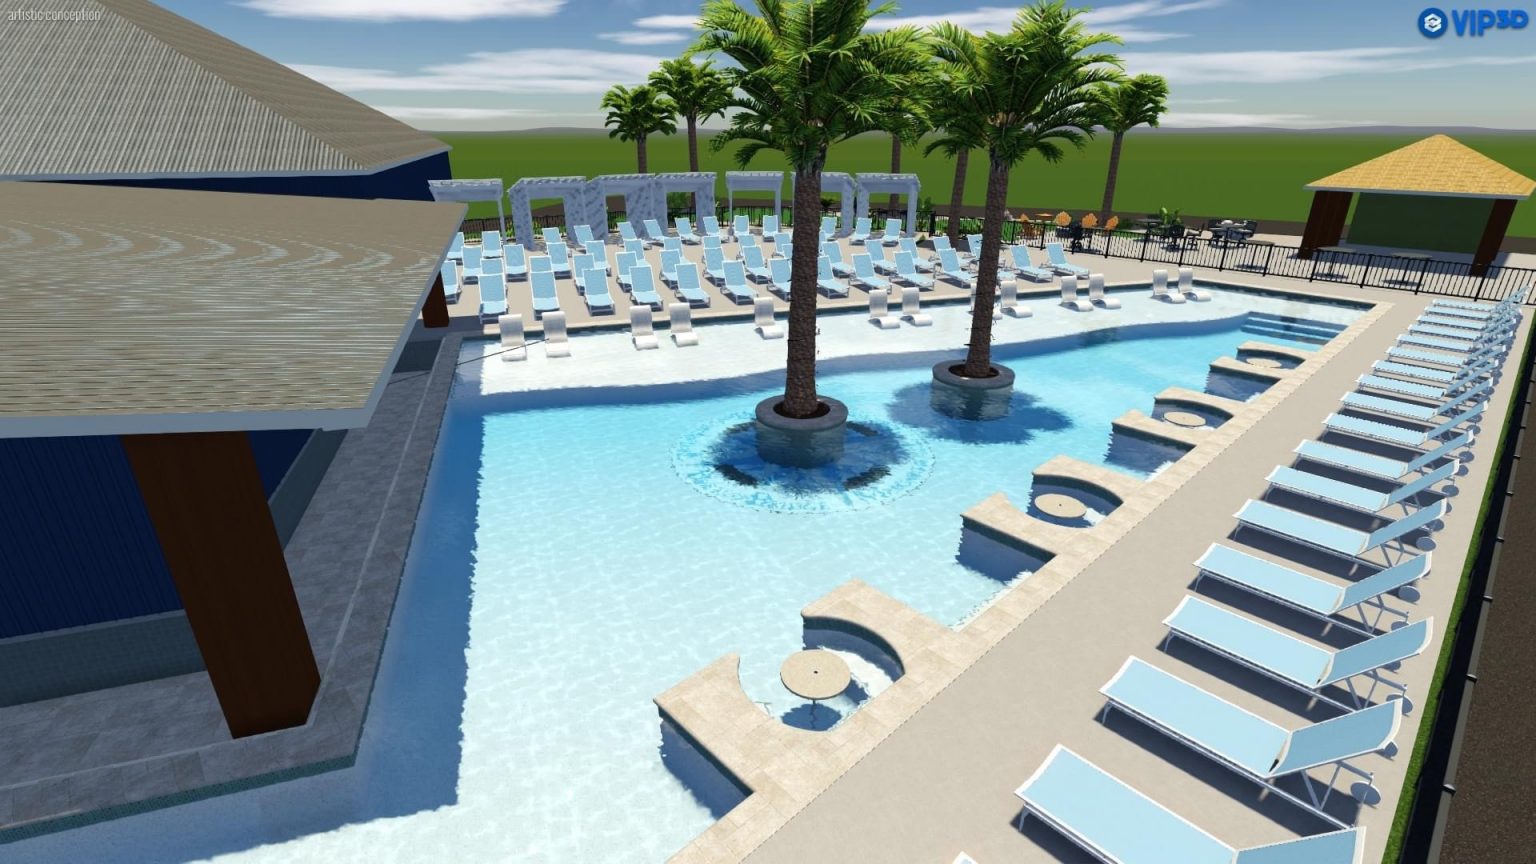 Cajun Palms To Rebrand As Camp Margaritaville RV Resort Breaux Bridge